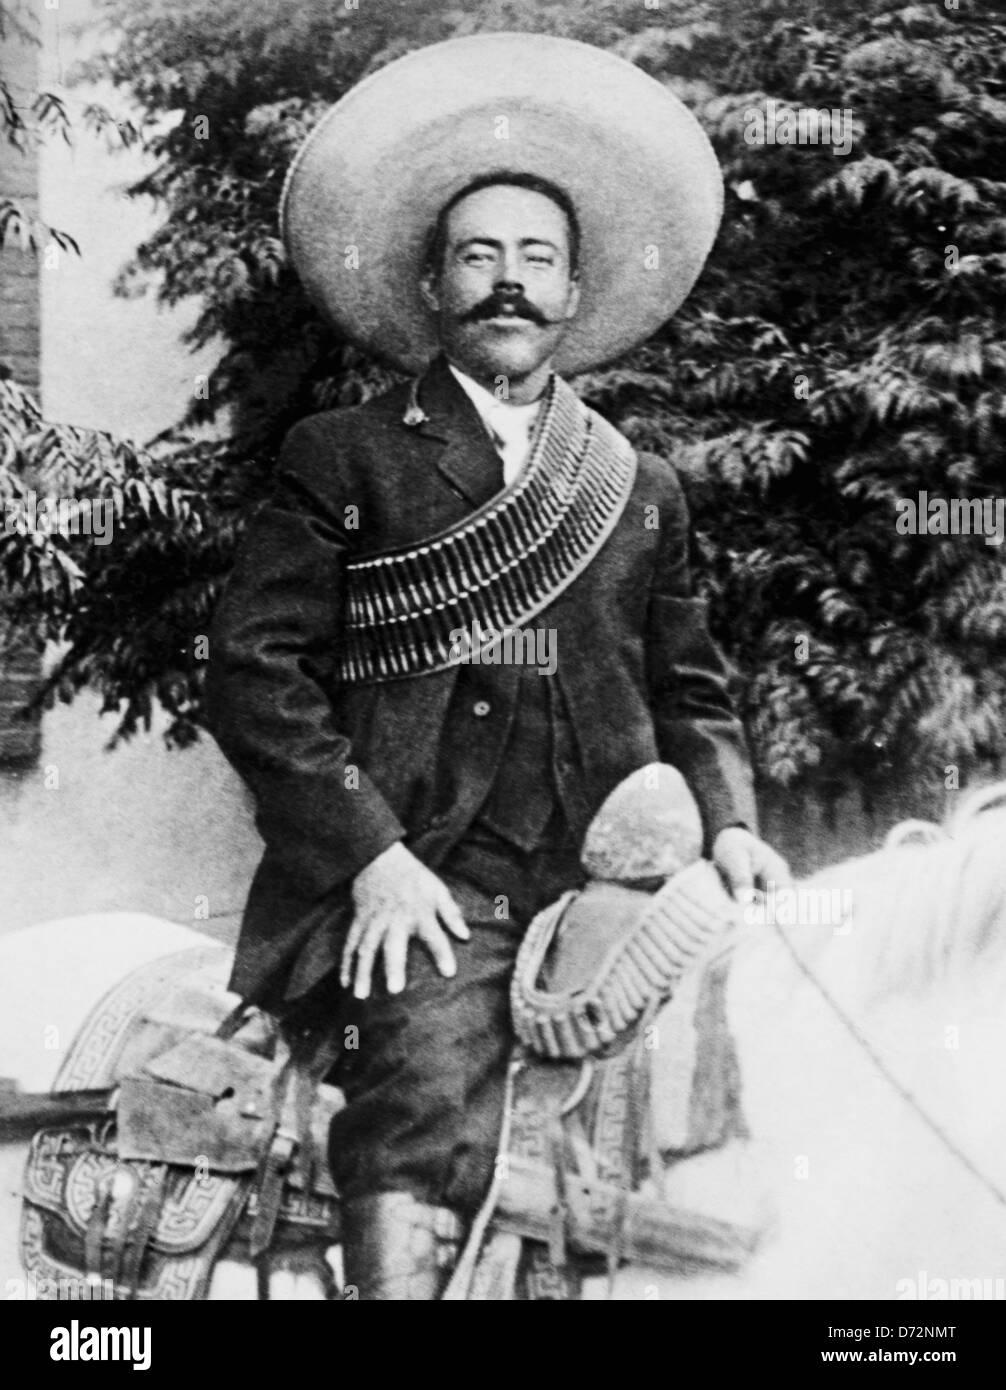 Vintage photo of Mexican revolutionary general Francisco “Pancho” Villa (1878 – 1923). Stock Photo